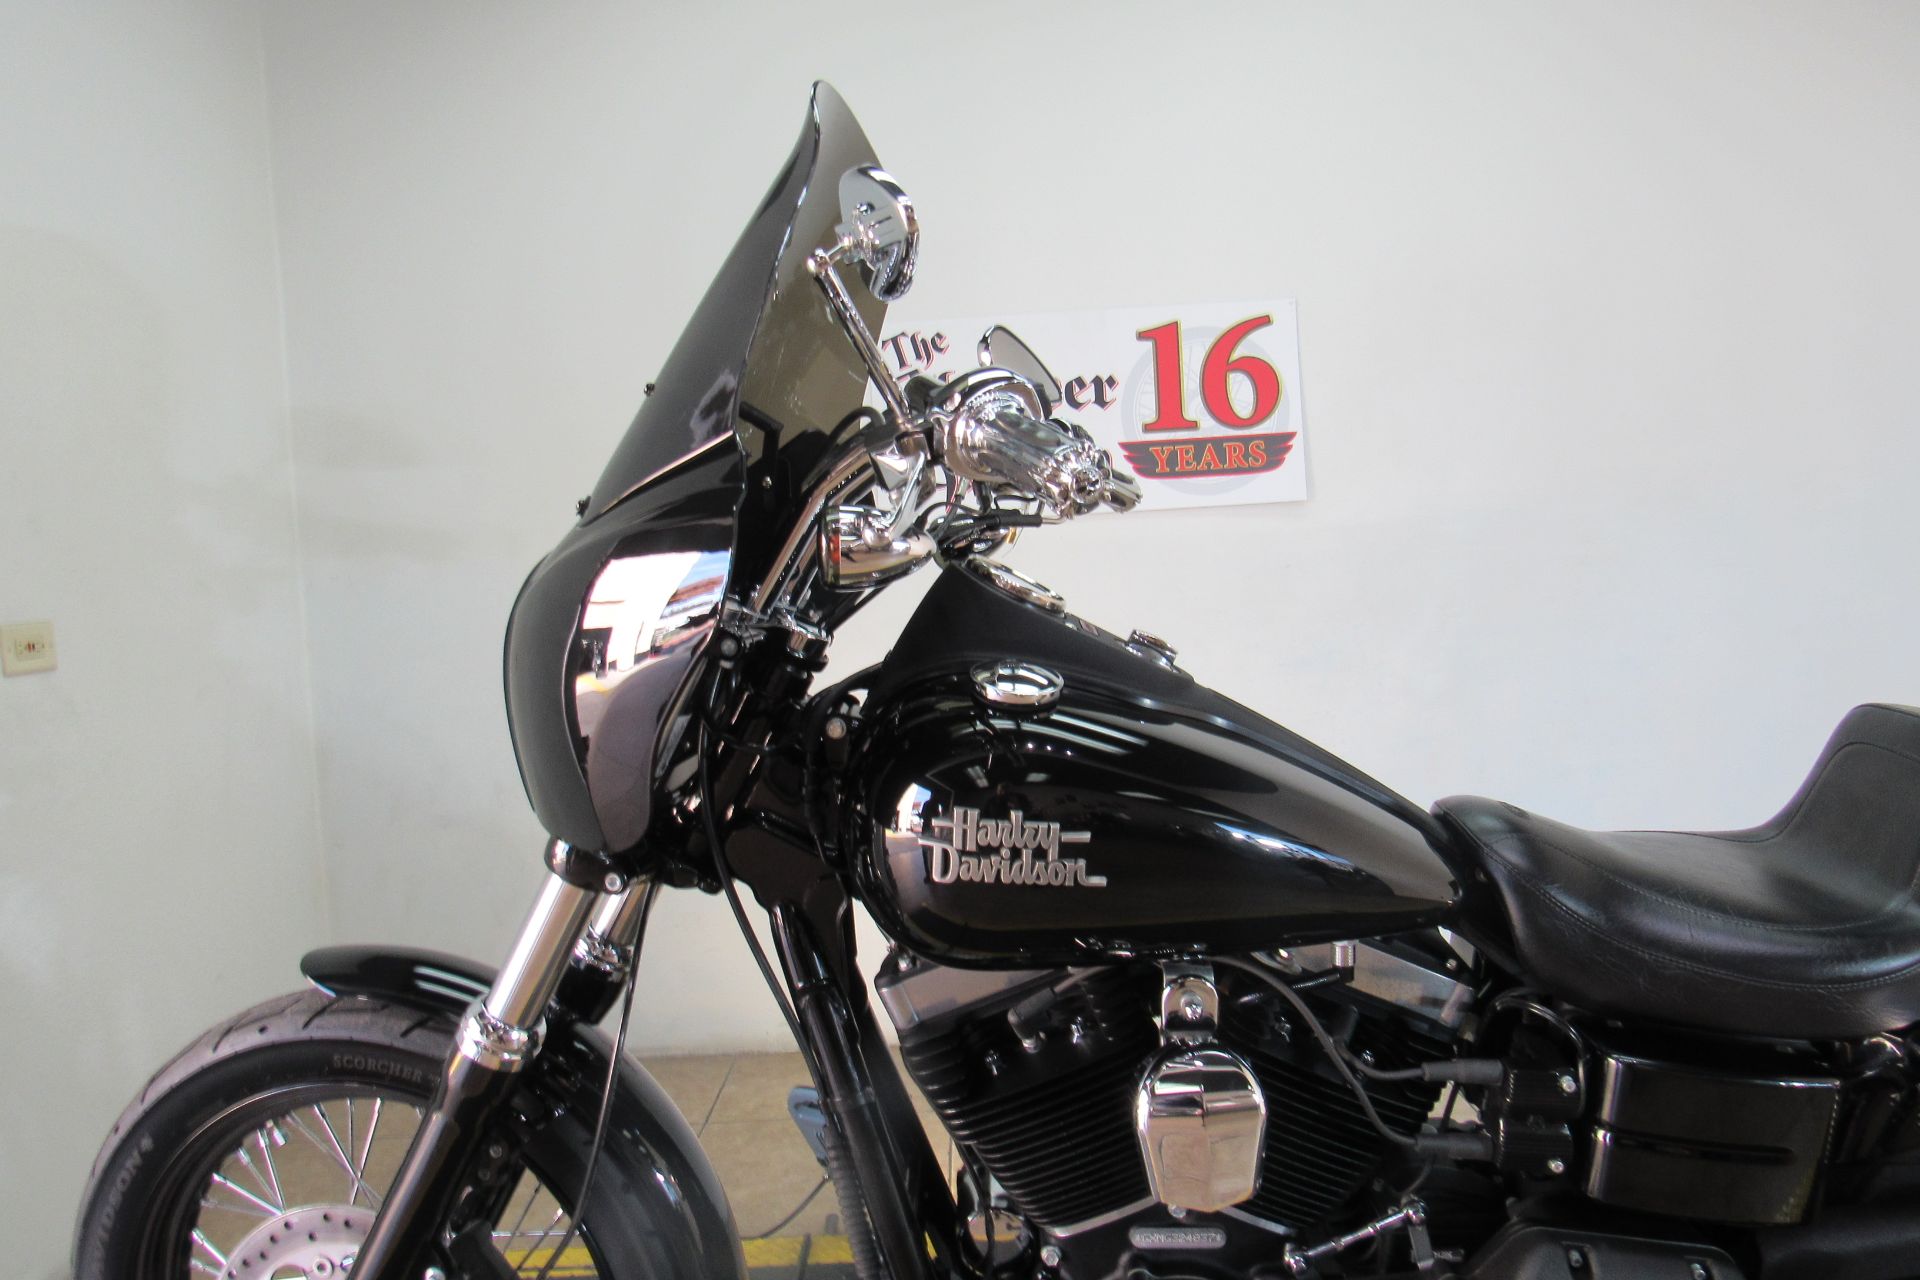 2016 Harley-Davidson Street Bob® in Temecula, California - Photo 17